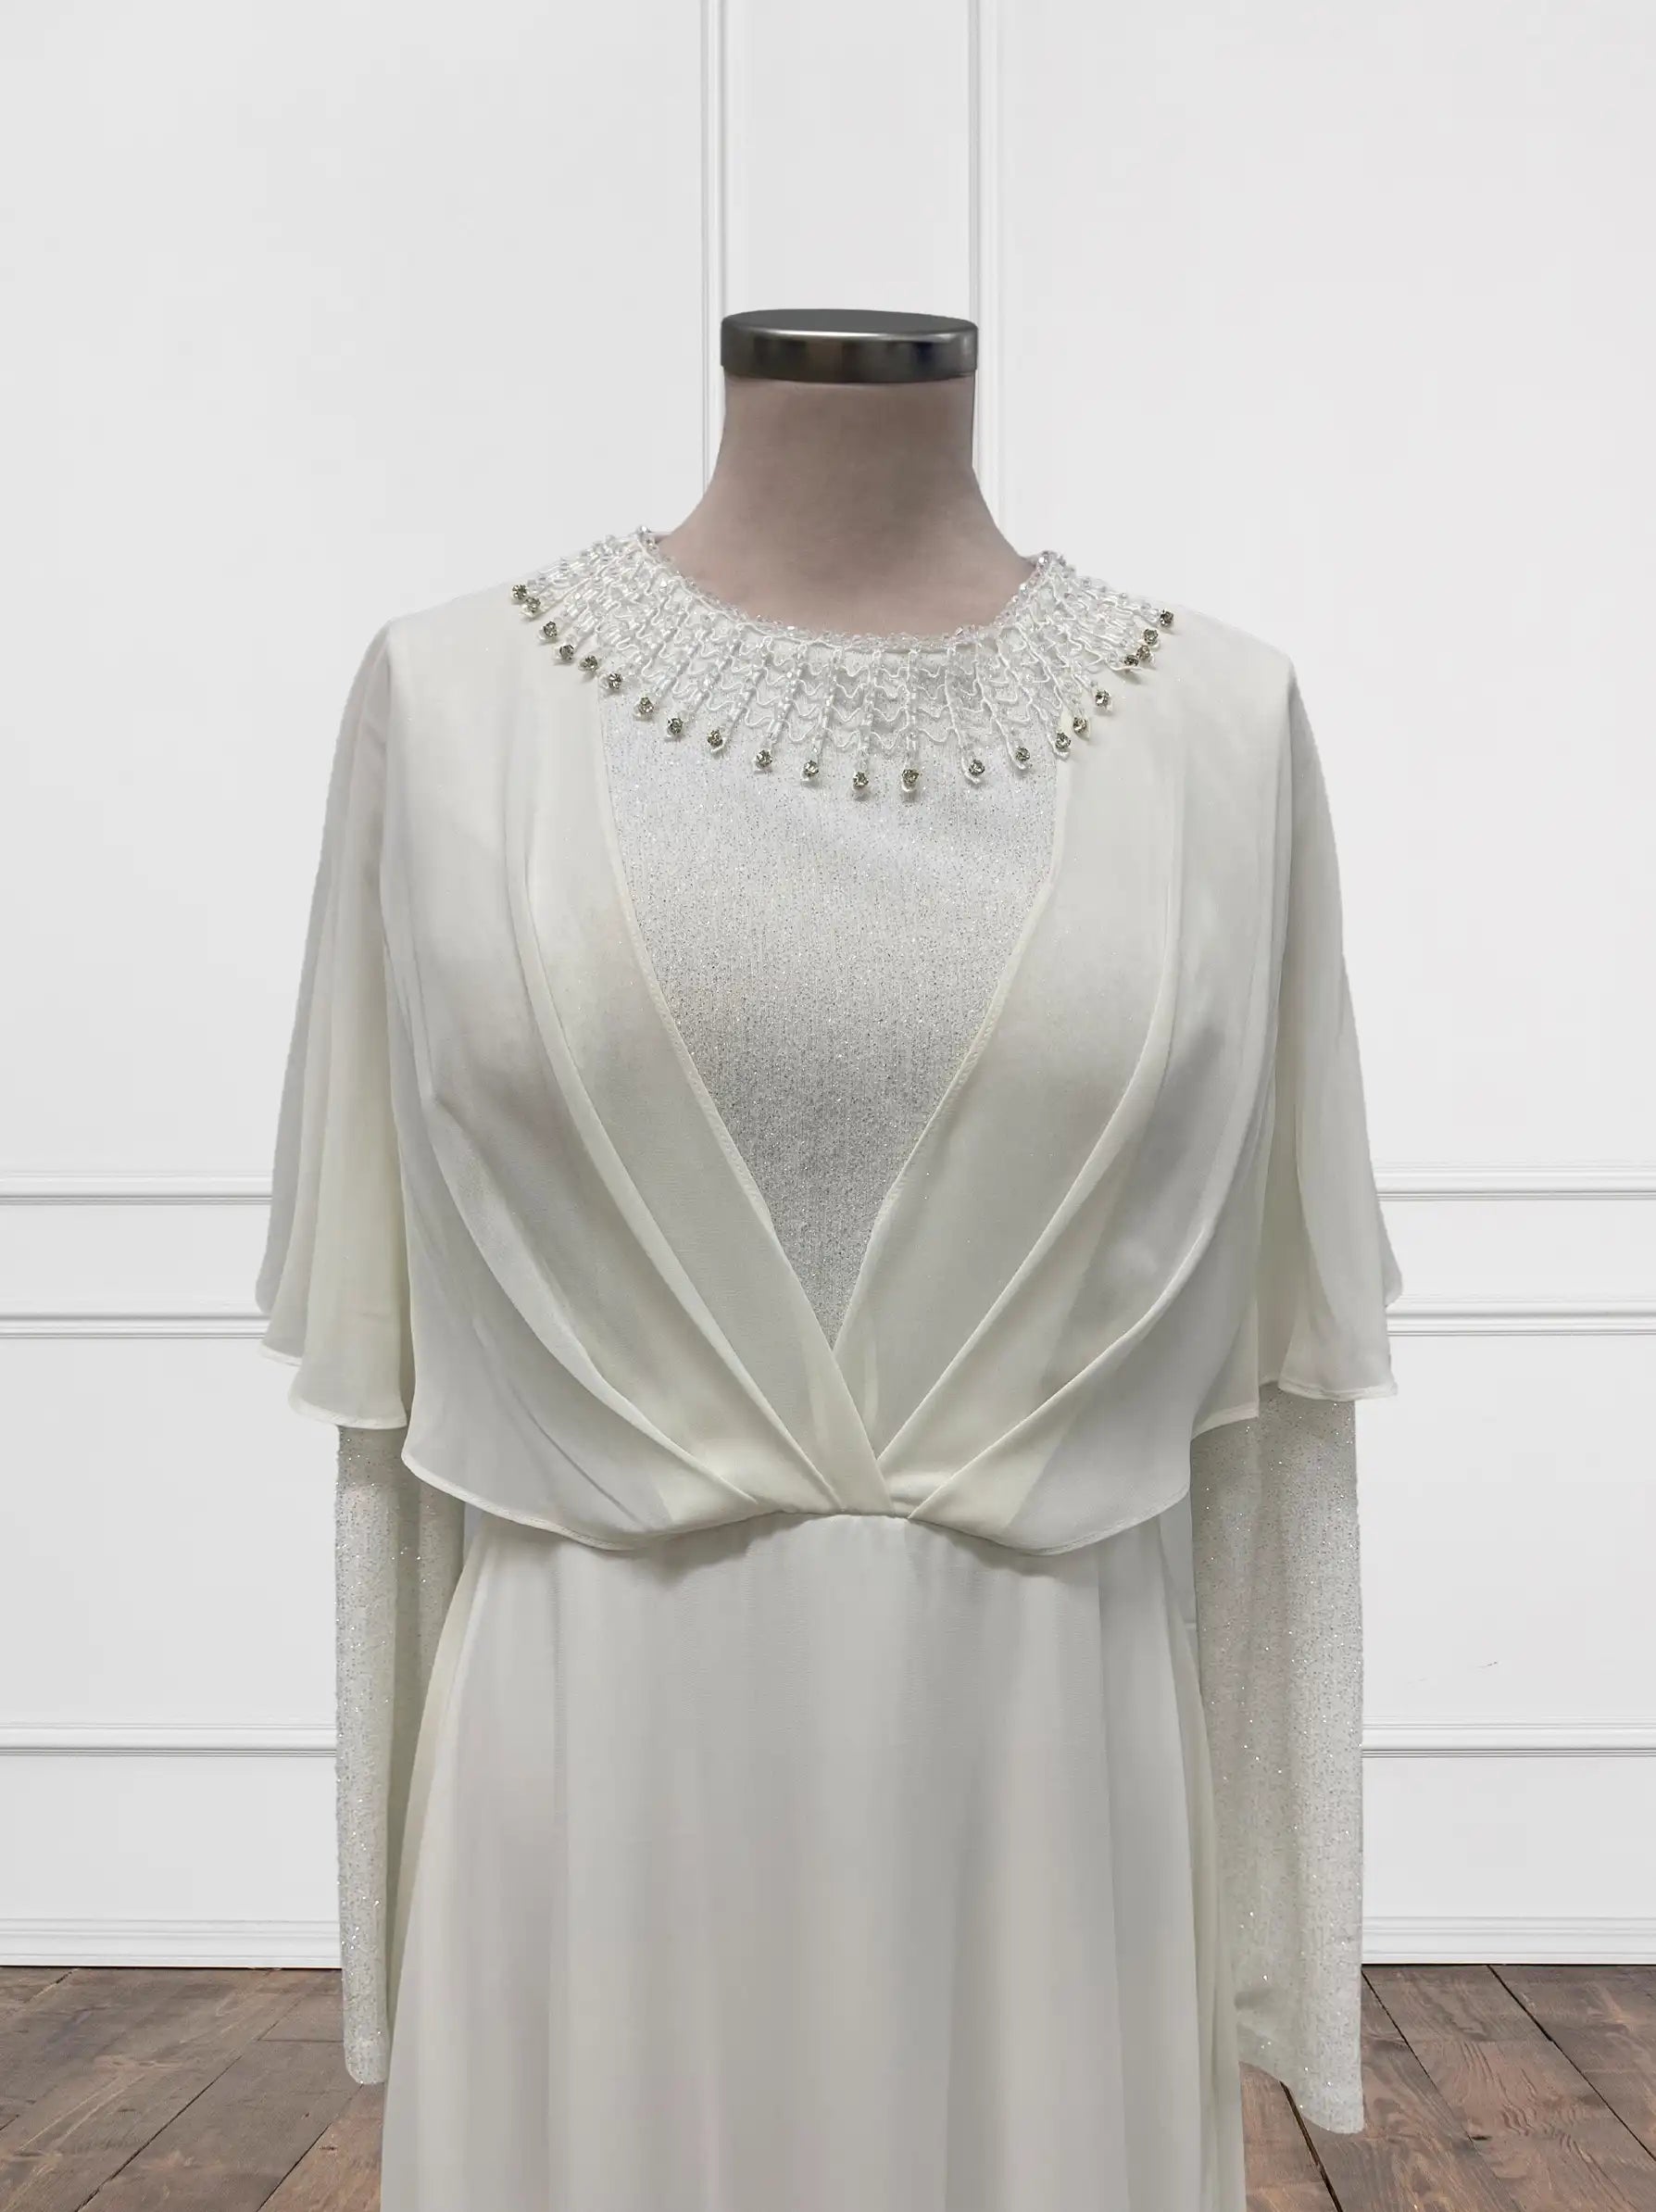 Popular Satin Ball Gown Wedding Dresses Long Sleeve 2020 Bridal Gowns –  angelaweddings